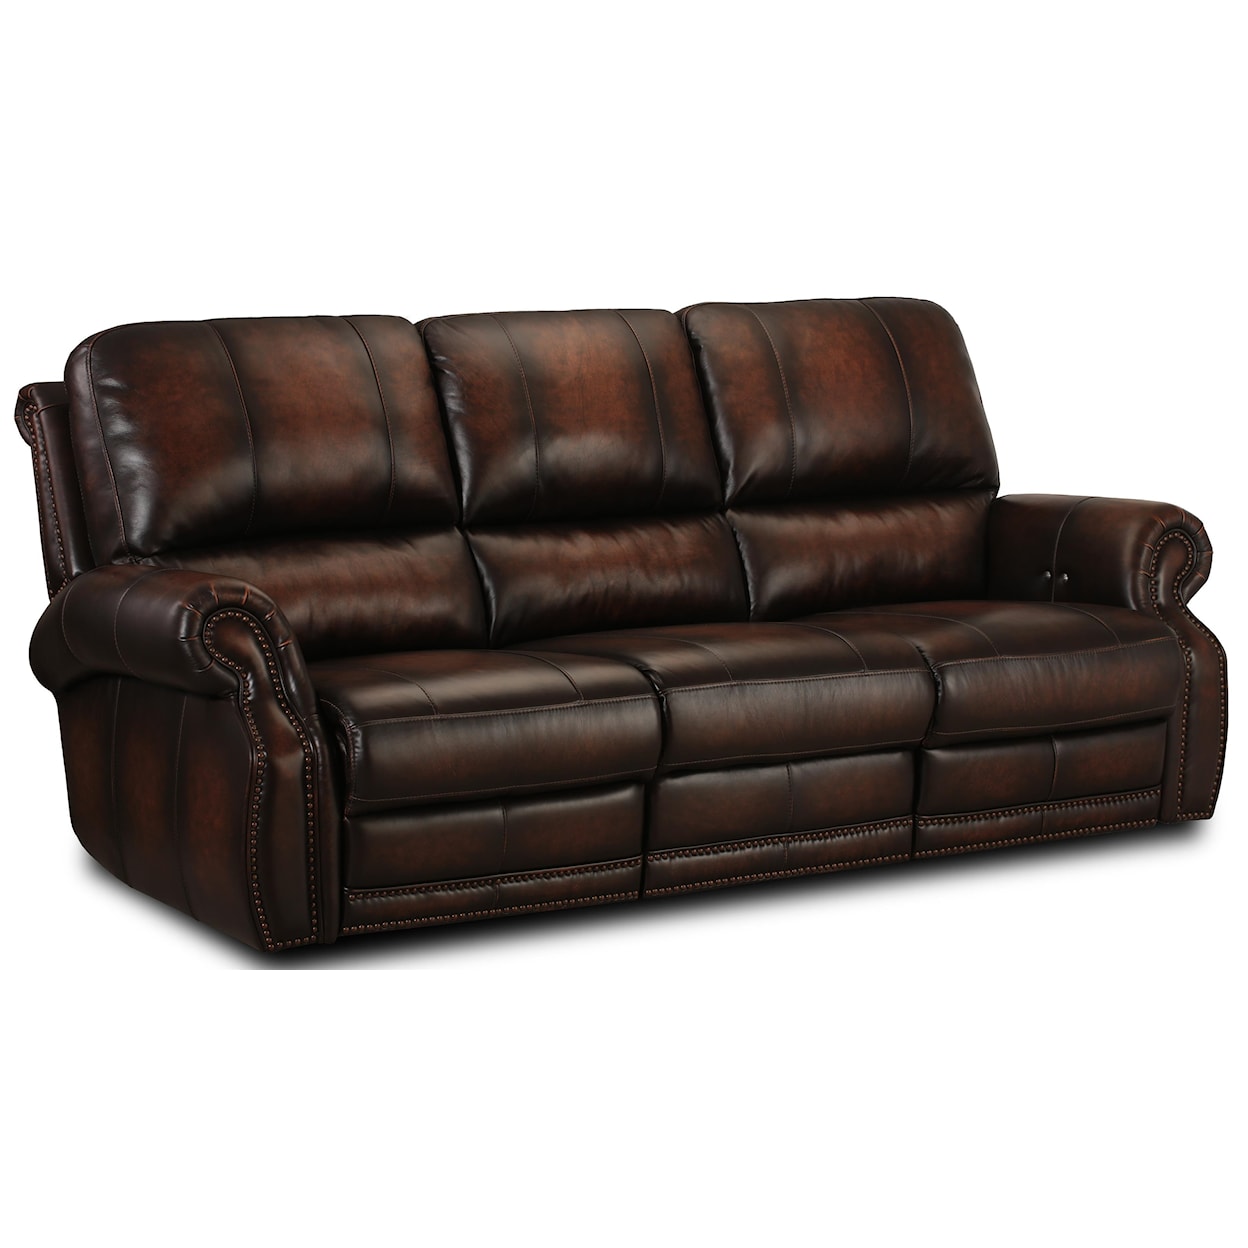 Simon Li Hillsboro Leather Reclining Sofa